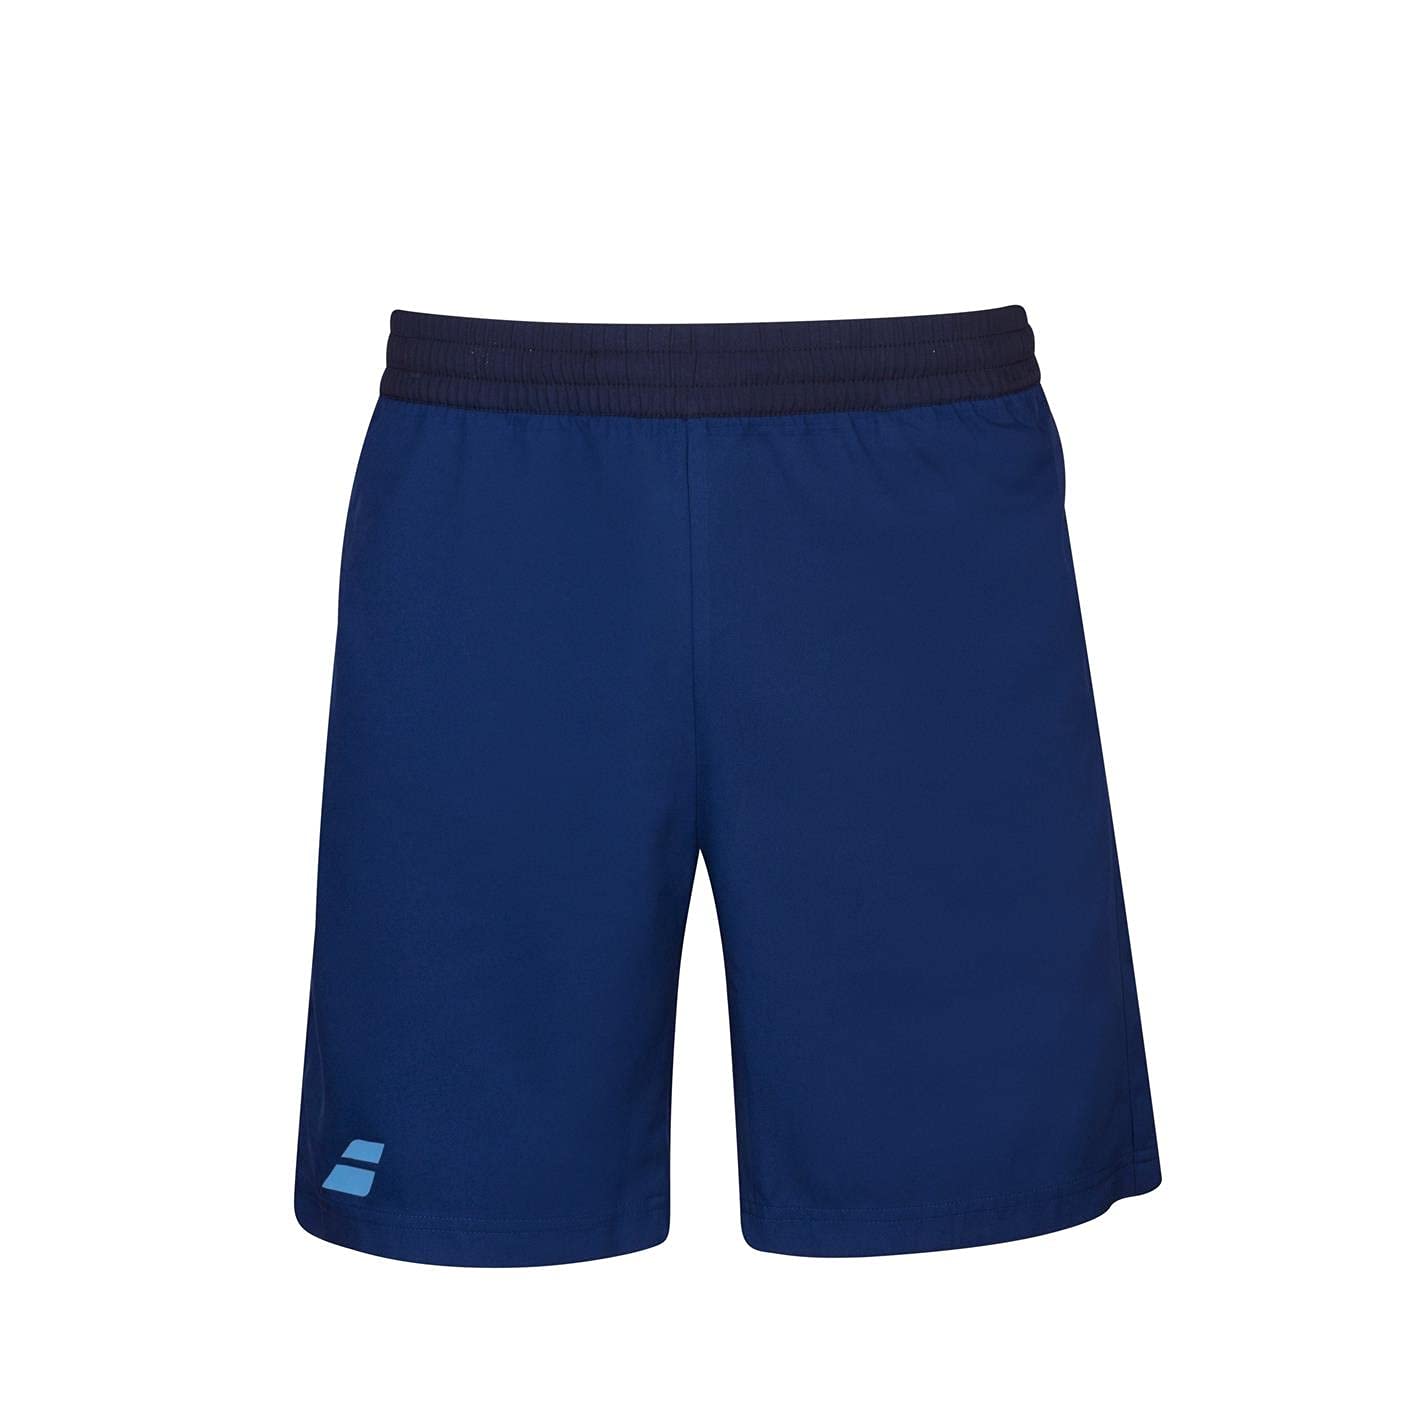 Babolat Herren Play Tennisshorts Training Shorts Tunnelzug Estate Blue XXL